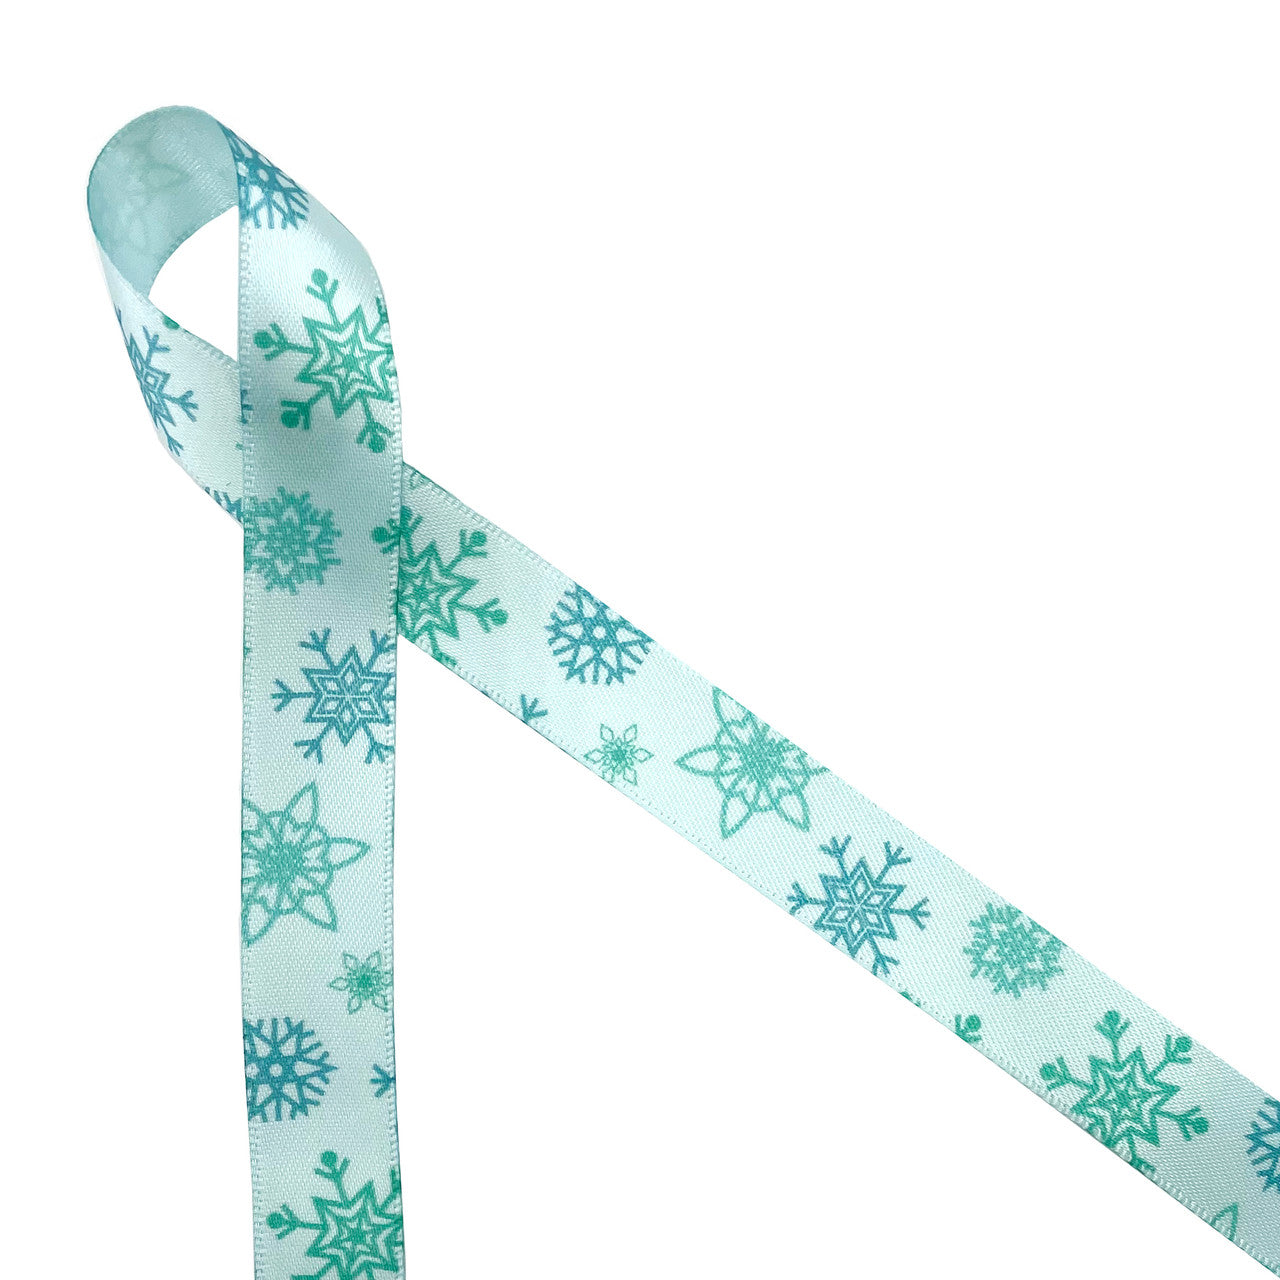 Snowflakes in medium blue on 5/8" ice blue single face satin ribbon.